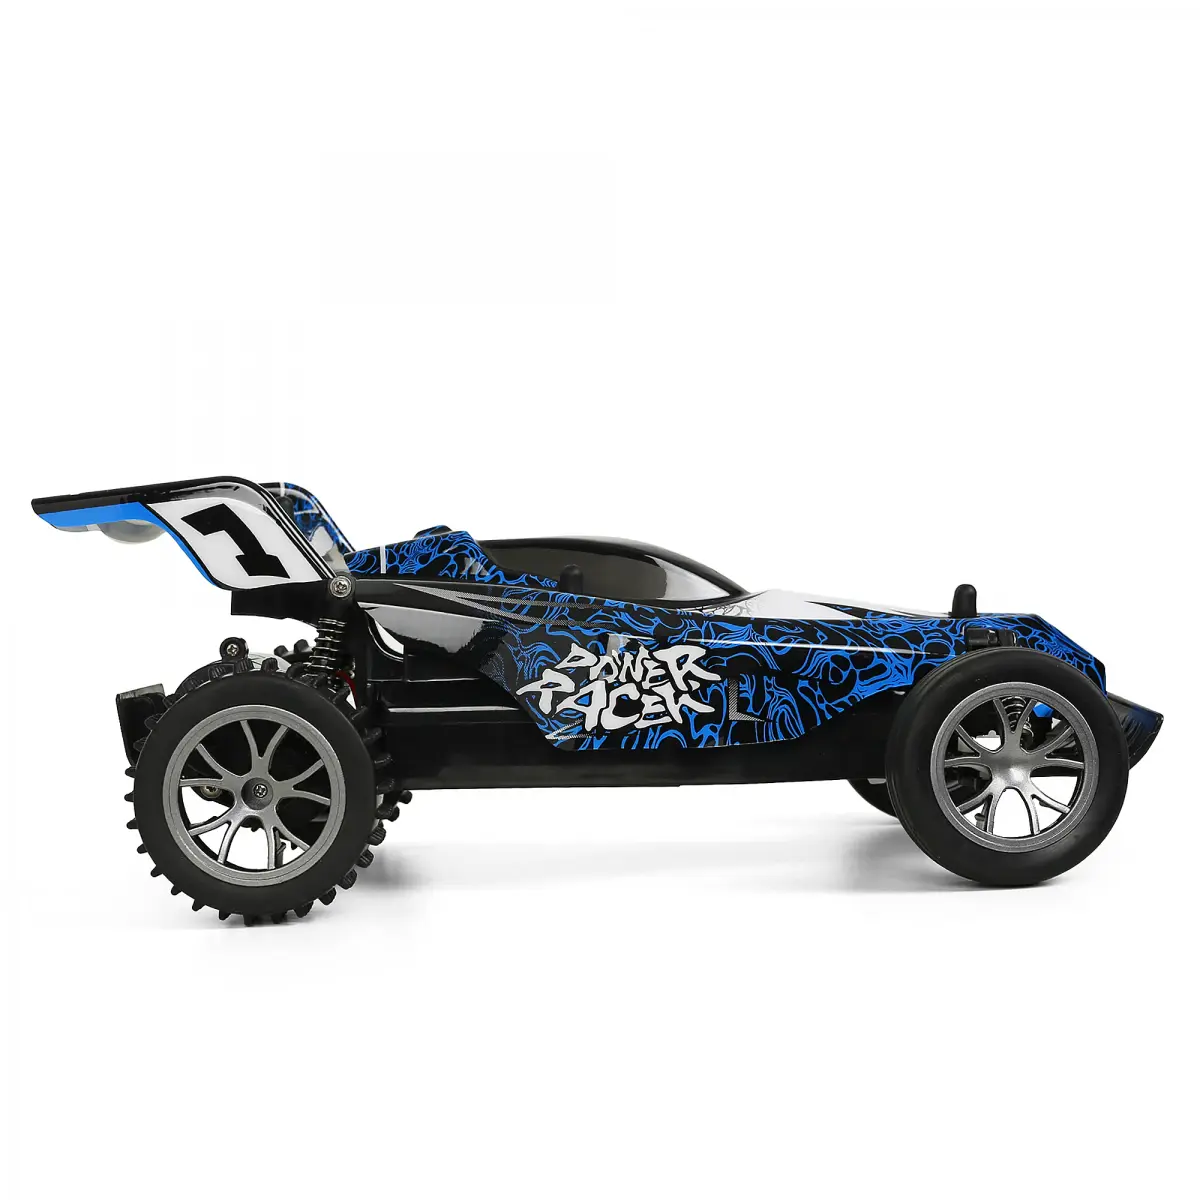 Ralleyz Remote Control Buggy High Speed Car, 3Y+, Blue